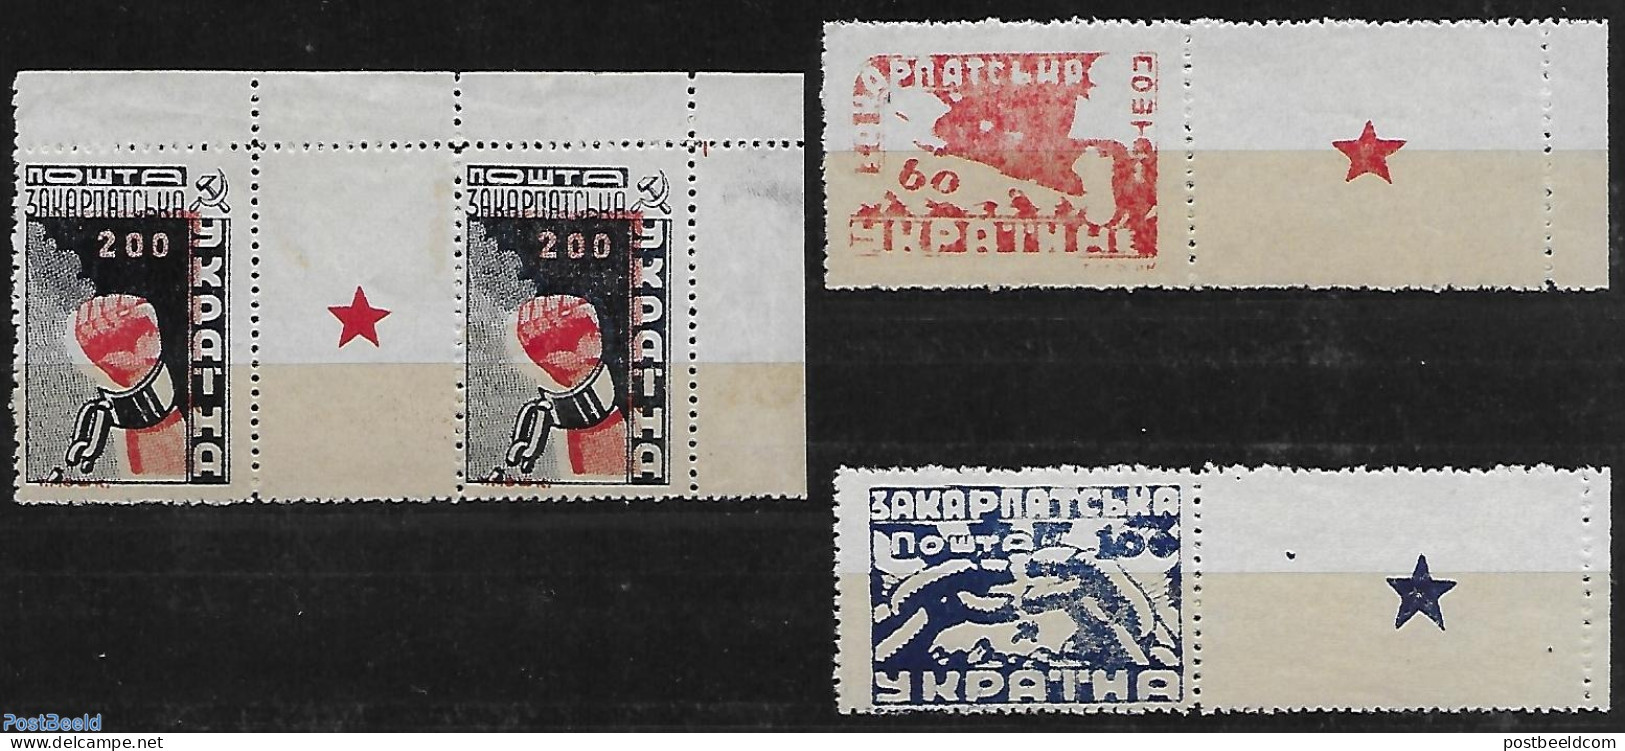 Ukraine 1945 With Decorative Field, Mint NH, Various - Errors, Misprints, Plate Flaws - Fouten Op Zegels